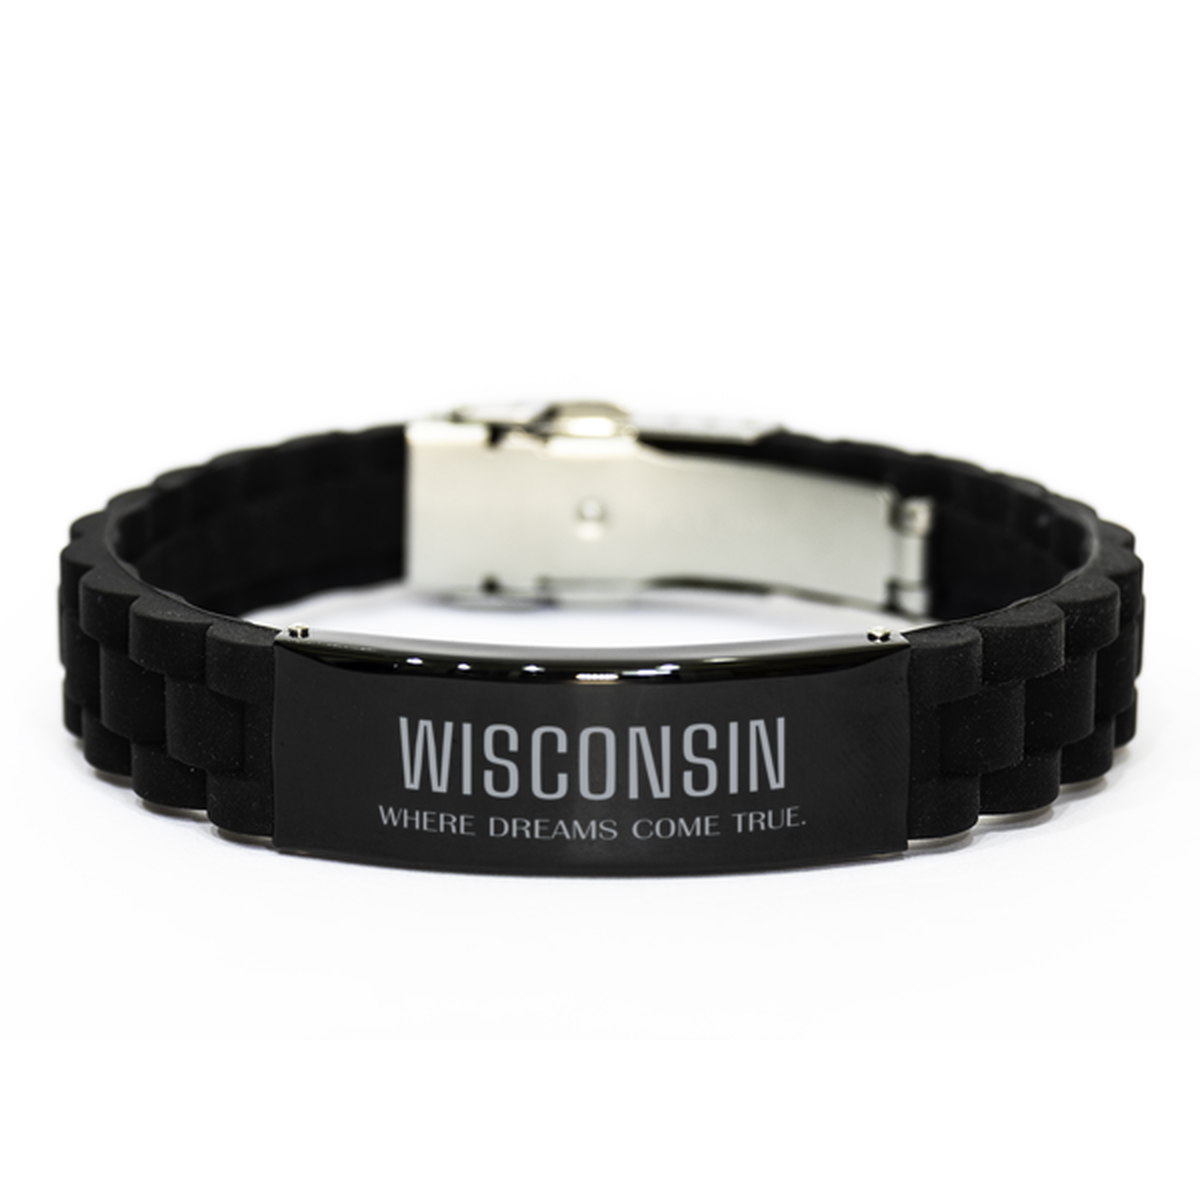 Love Wisconsin State Black Glidelock Clasp Bracelet, Wisconsin Where dreams come true, Birthday Inspirational Gifts For Wisconsin Men, Women, Friends